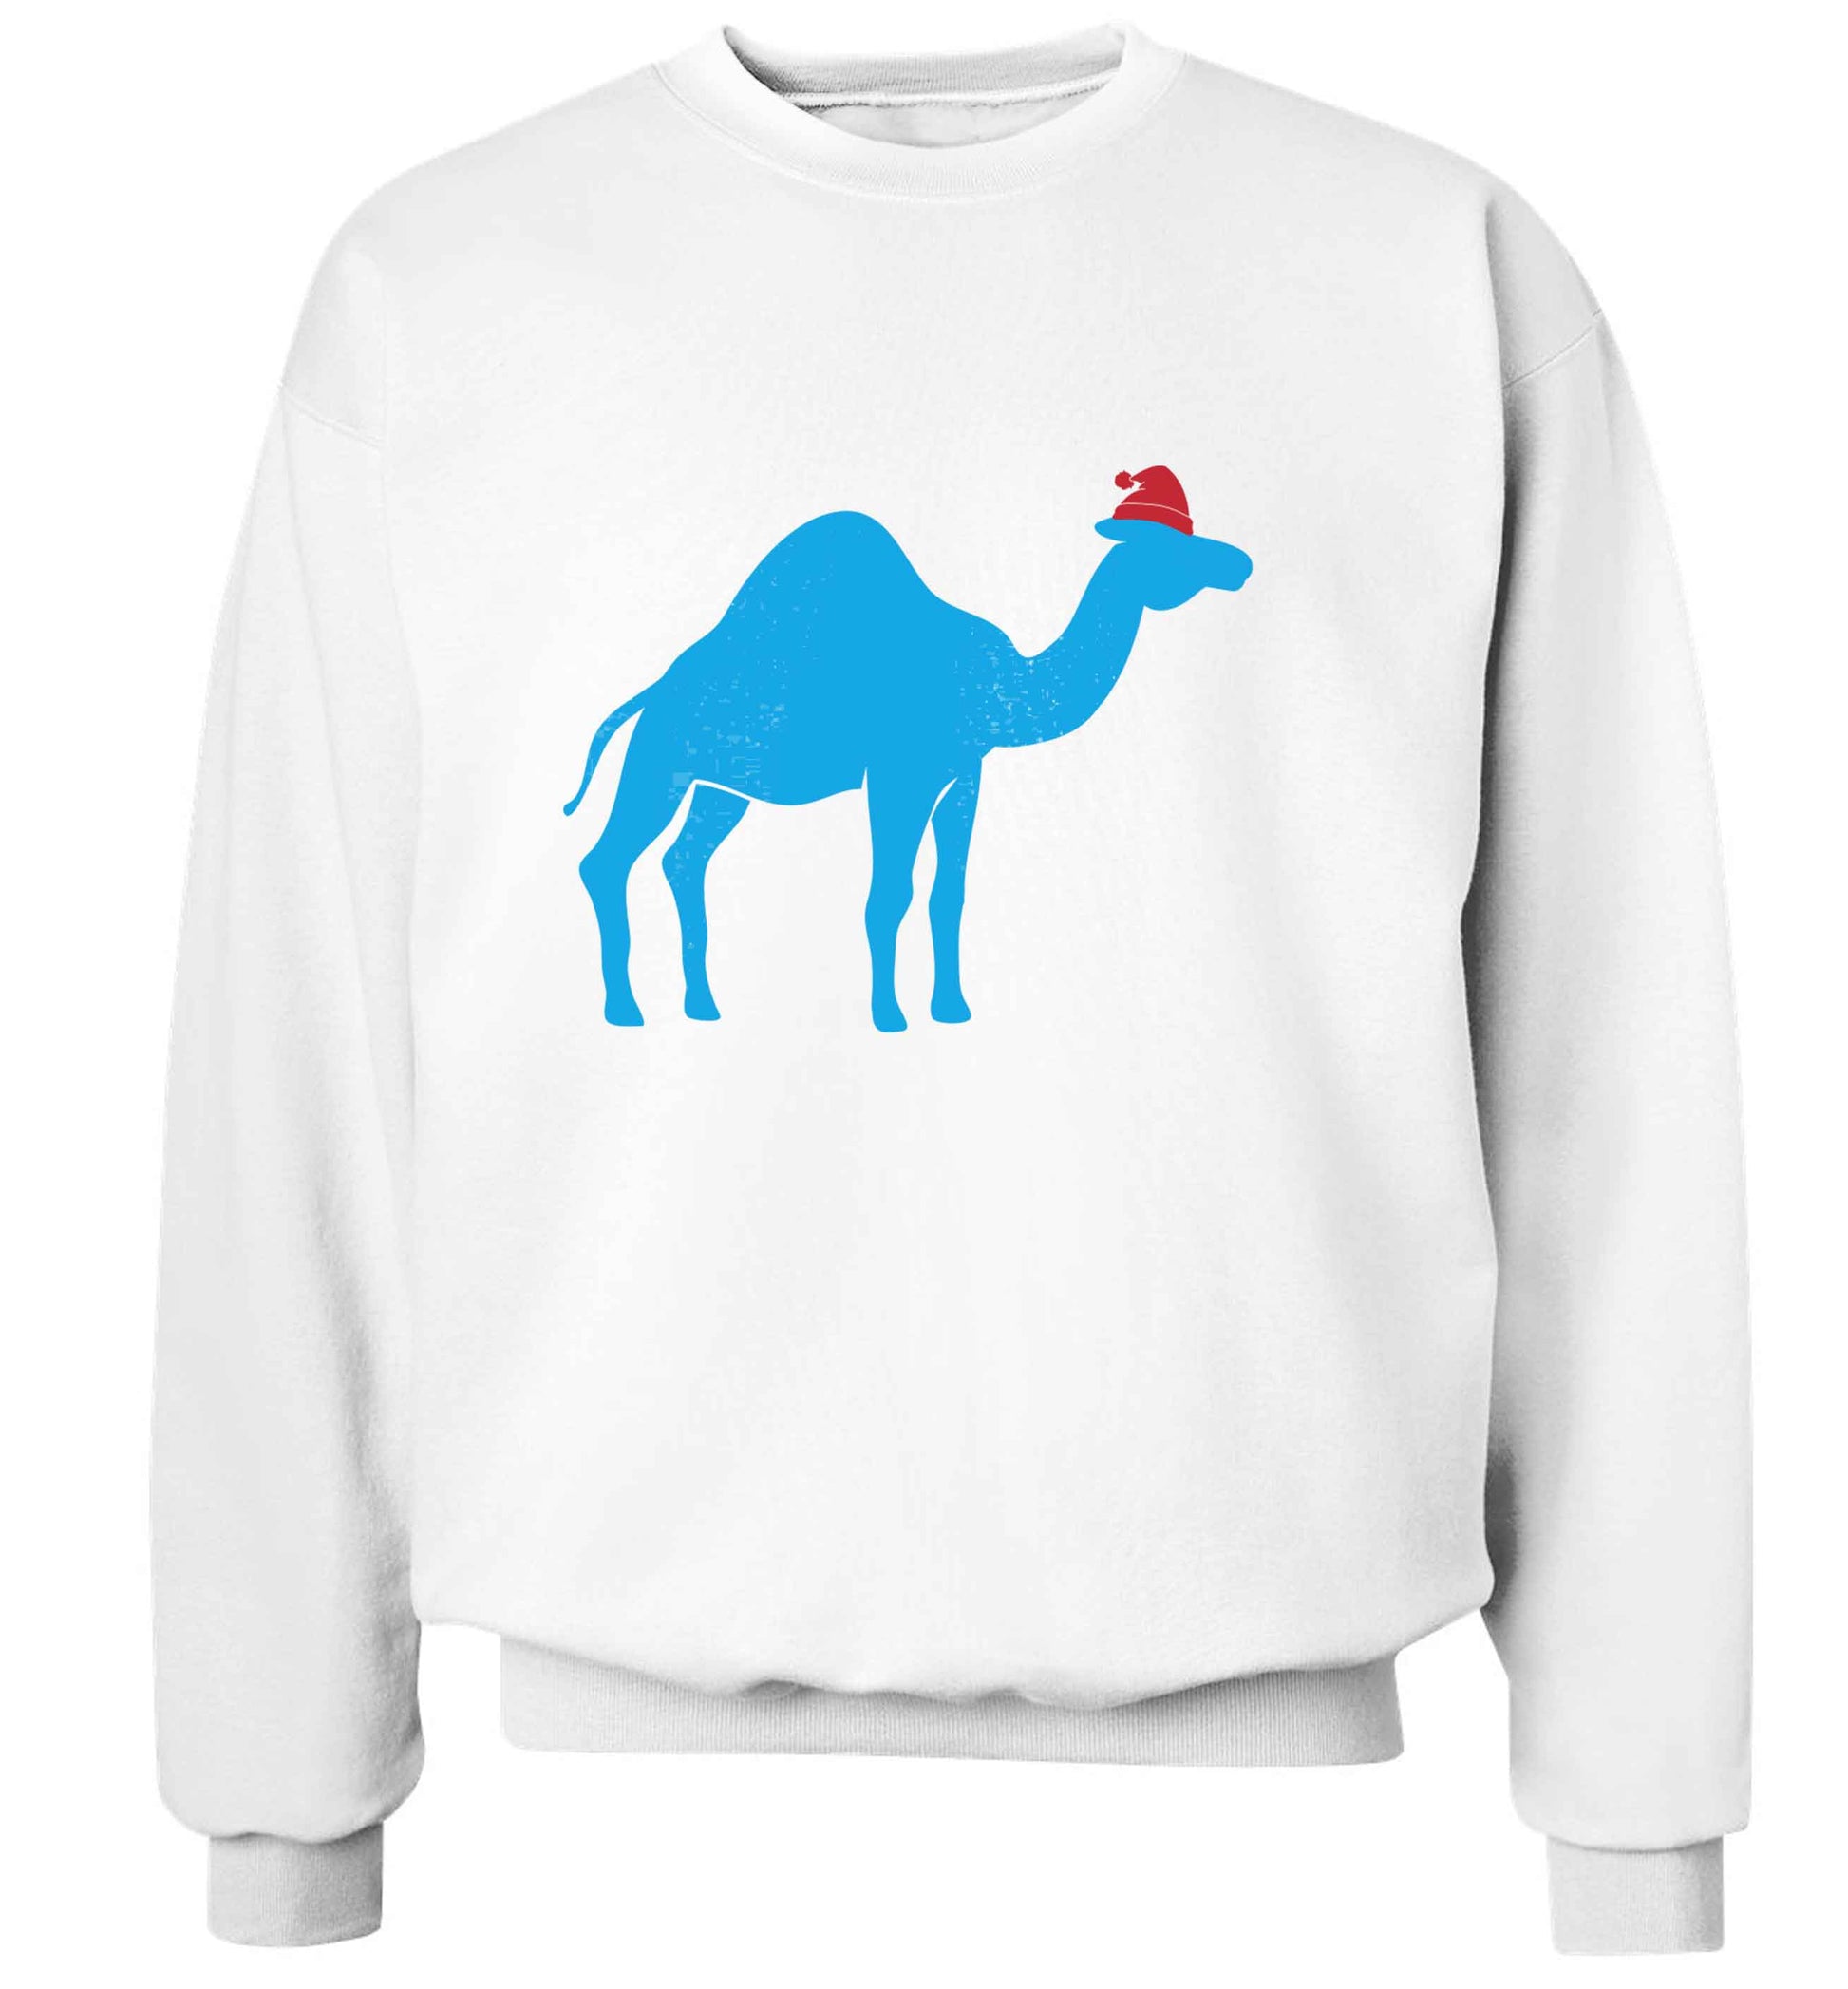 Blue camel santa adult's unisex white sweater 2XL